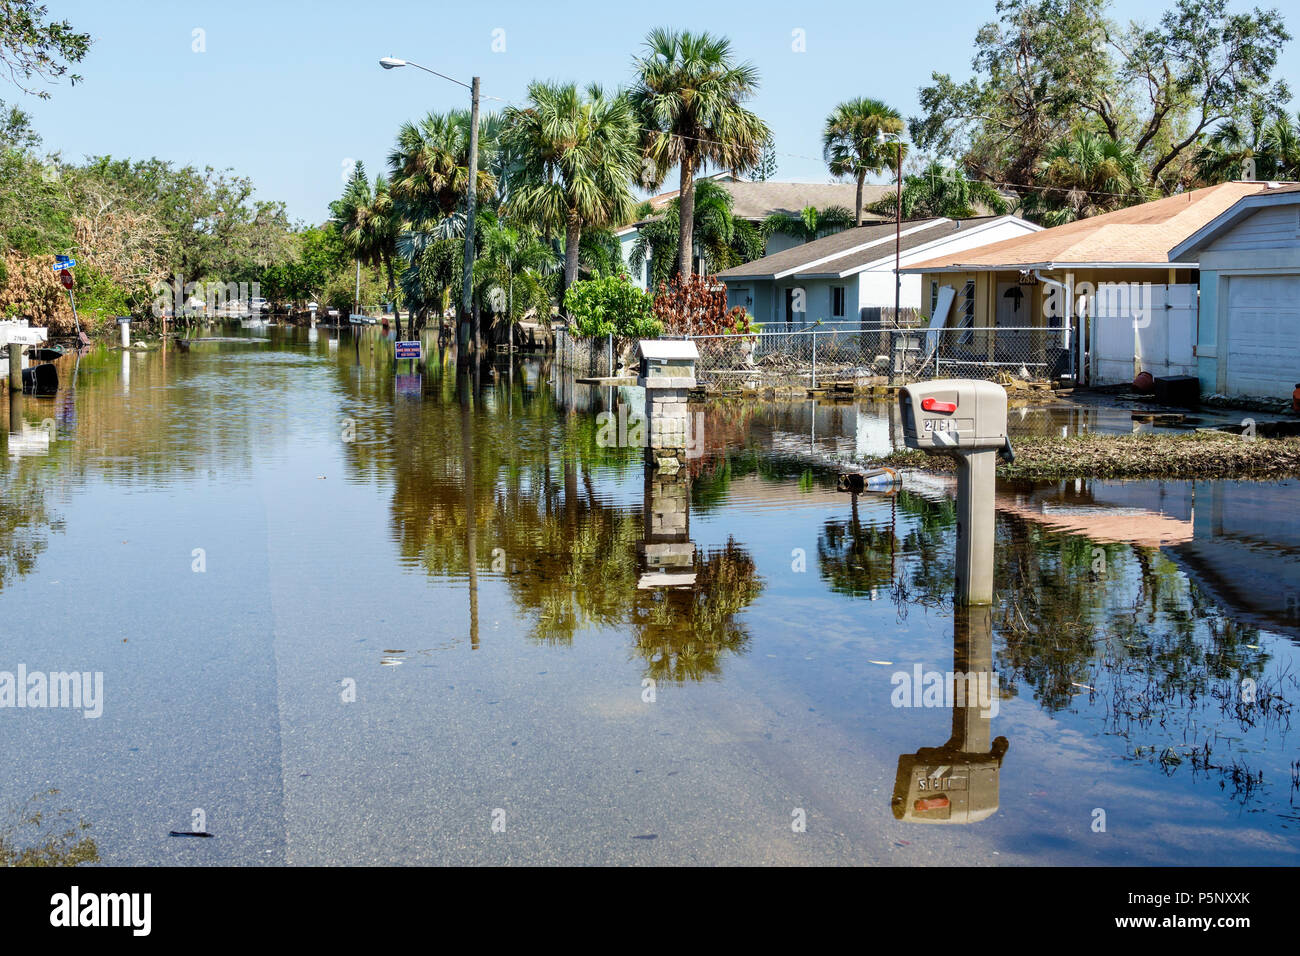 Florida,Bonita Springs,after Hurricane Irma wind rain damage destruction aftermath,flooding,house home houses homes residence,neighborhood,stagnant wa Stock Photo